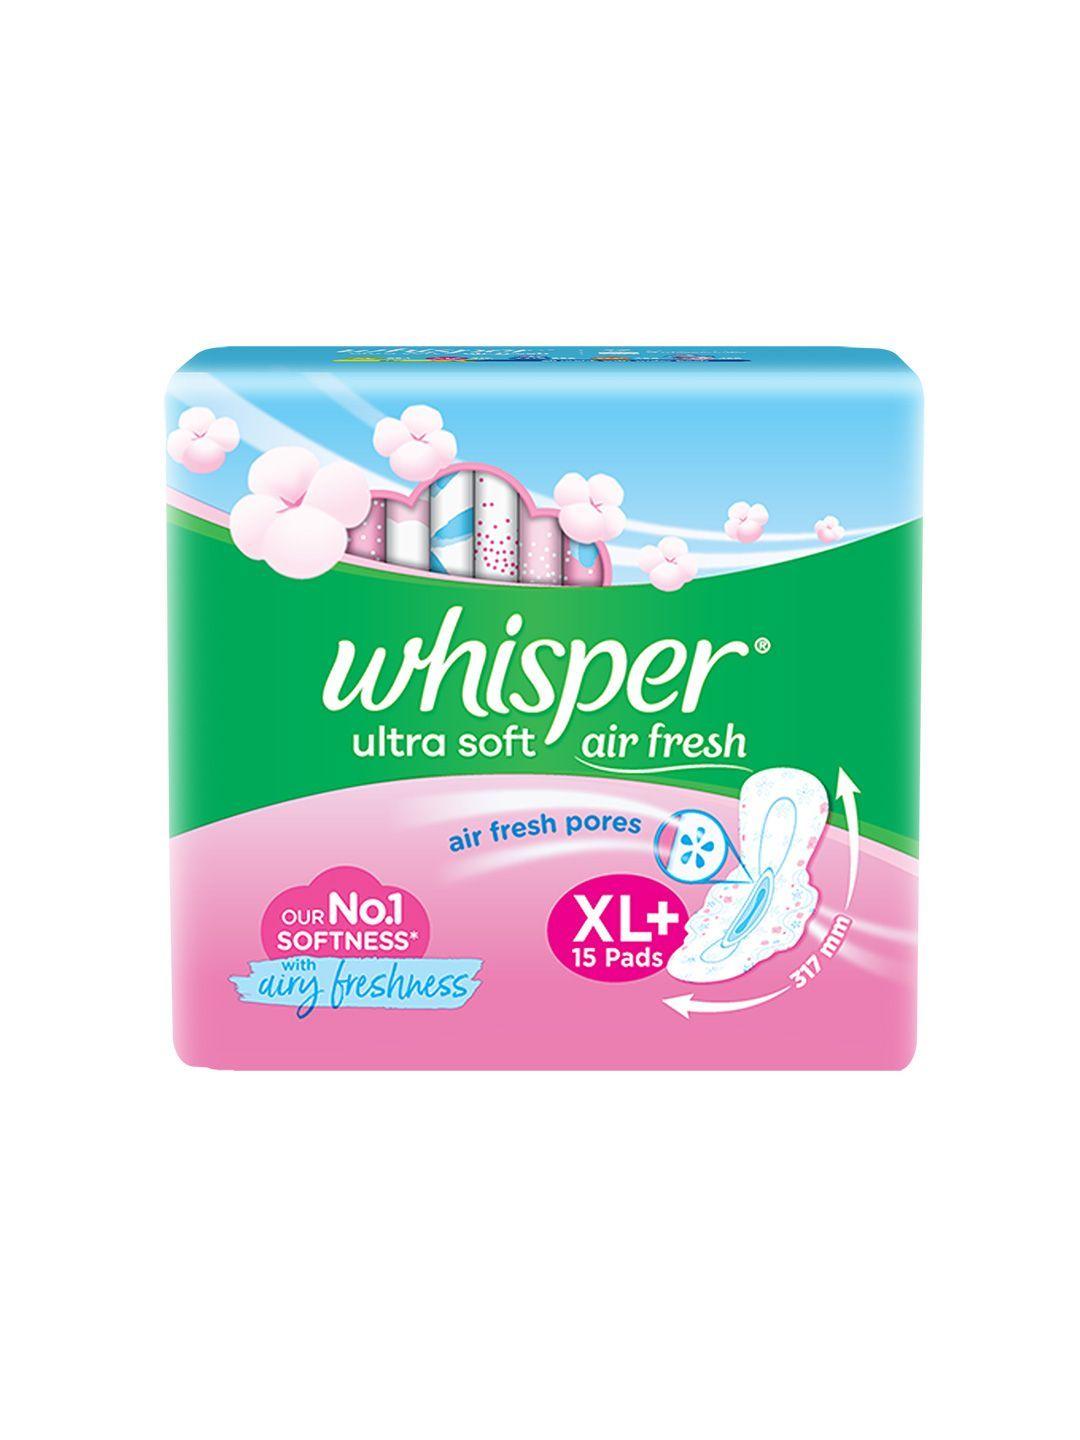 whisper-ultra-soft-xl+-sanitary-pads---15-pads